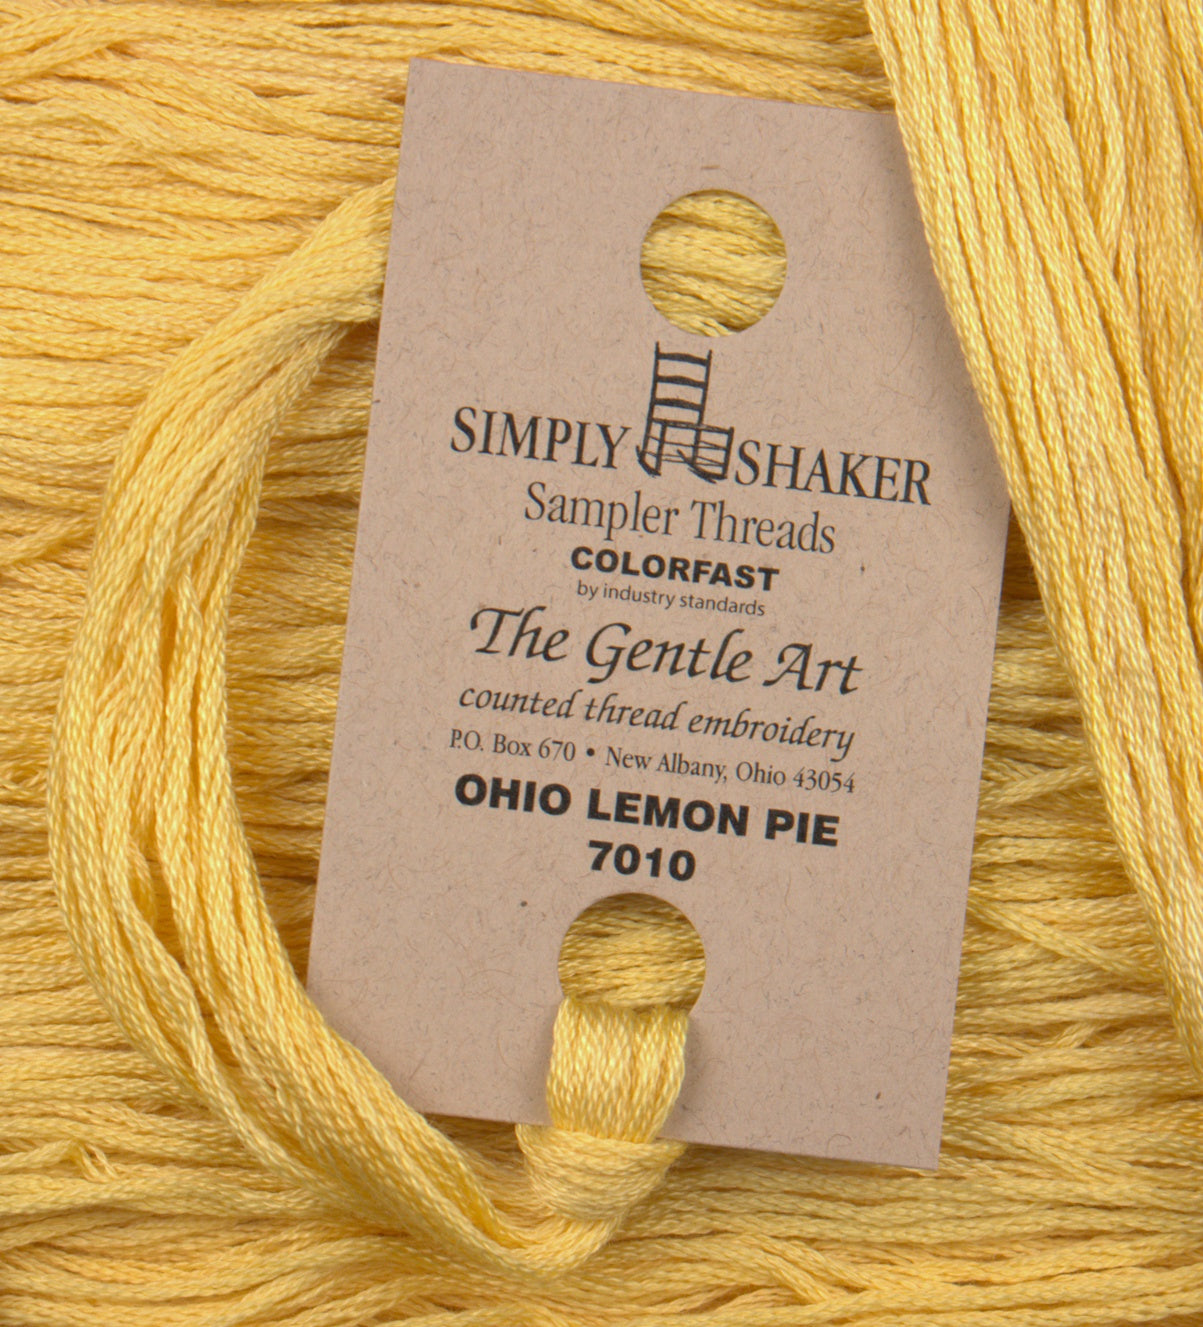 Ohio Lemon Pie 7010